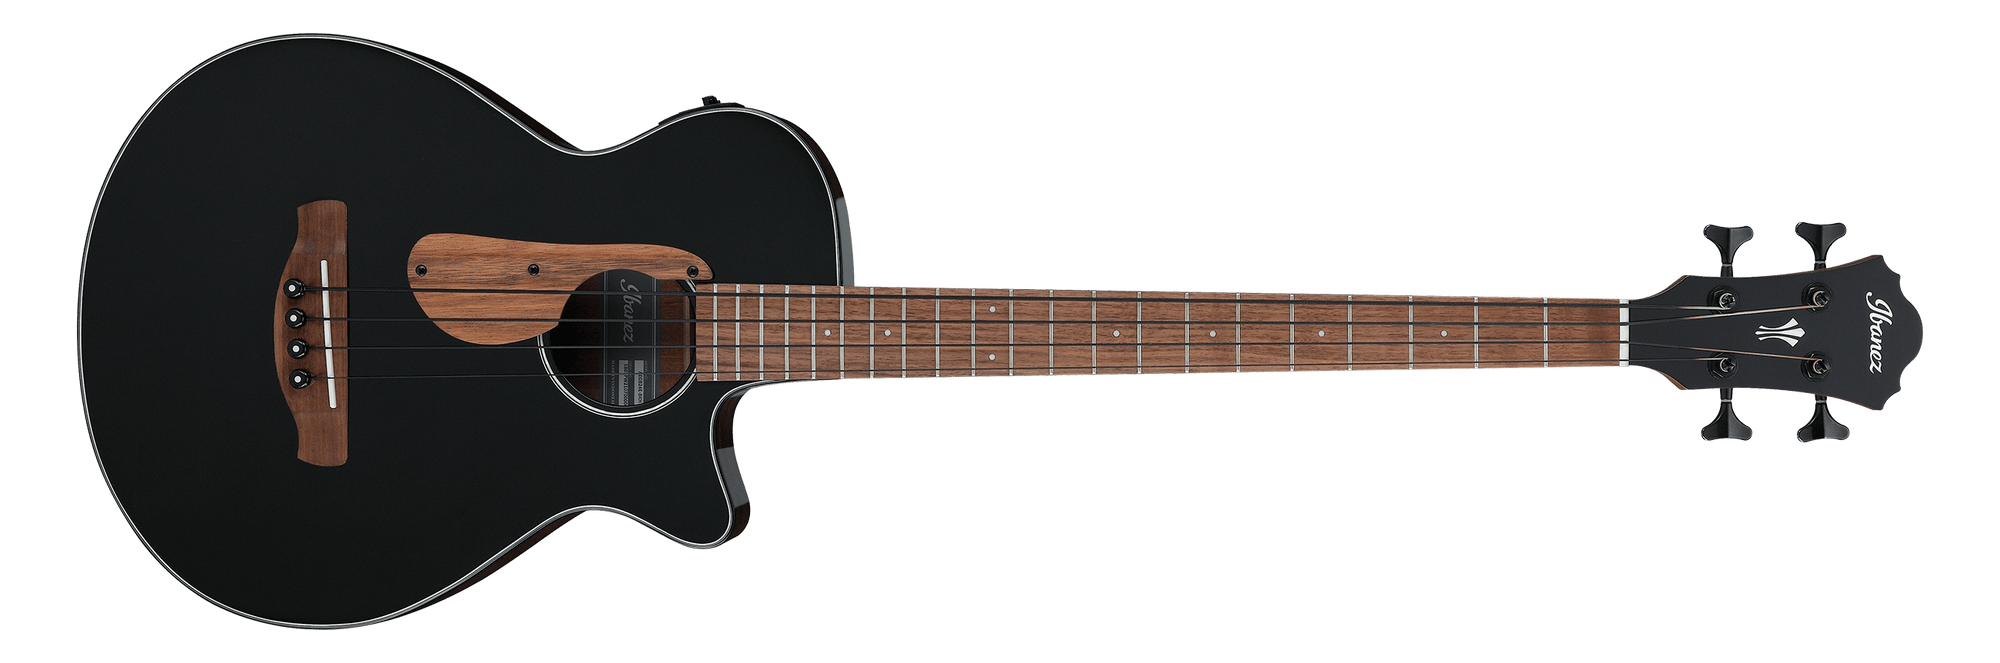 AEGB24EBKH Electric Acoustic Bass Guitar, Black High Gloss